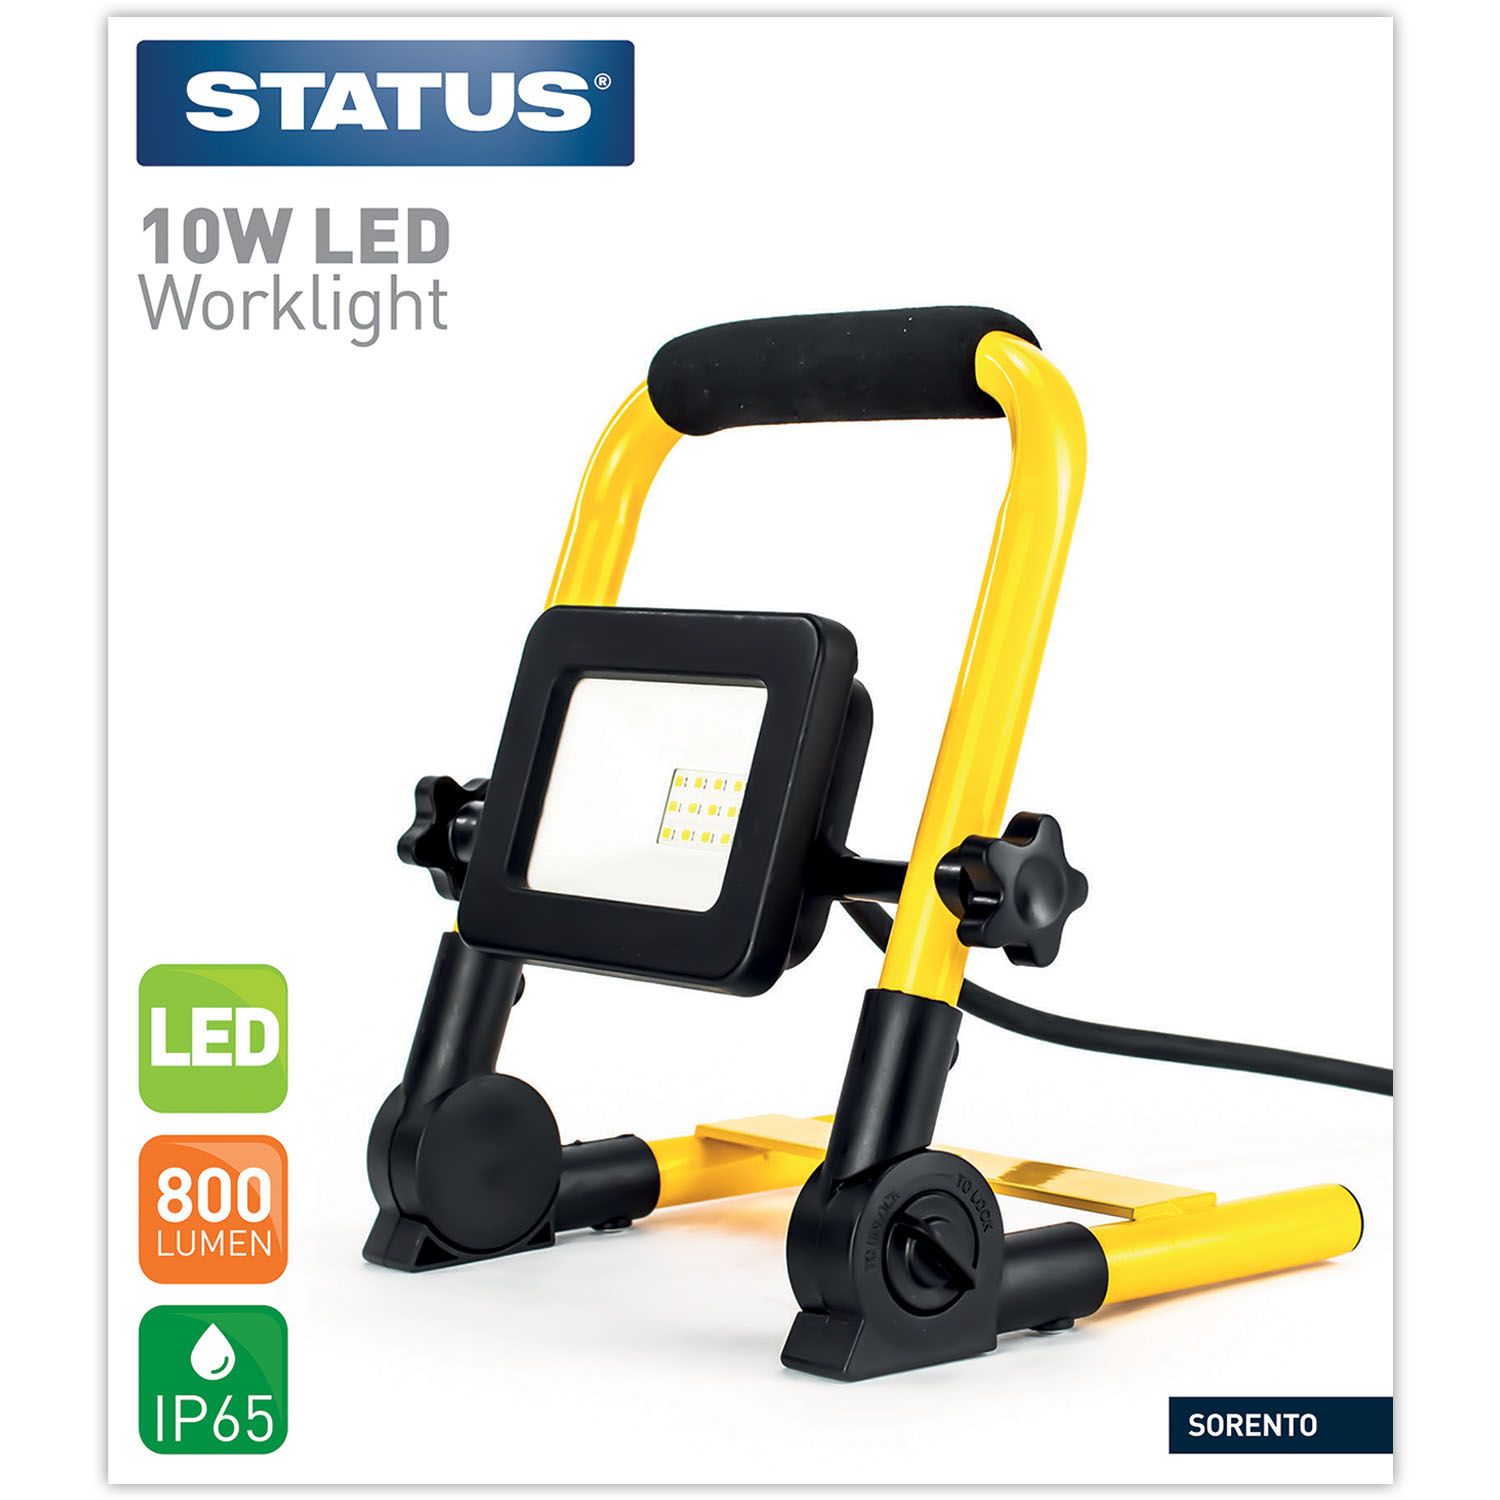 Status 10 Watt LED Plug-In Work Light Flood Light, Yellow